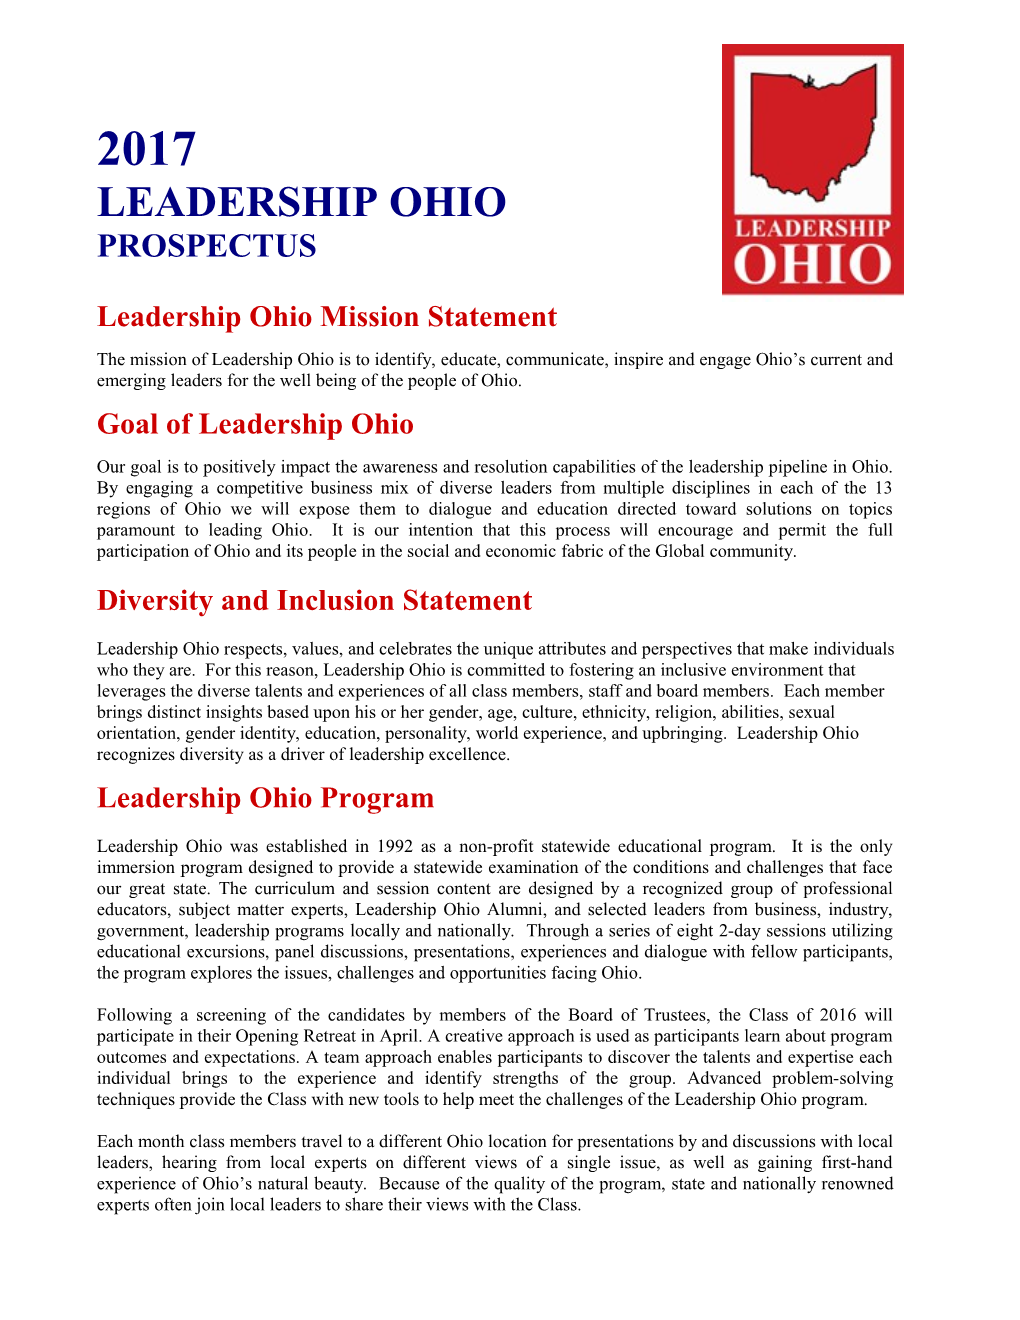 Leadership Ohio Application 2007 Class